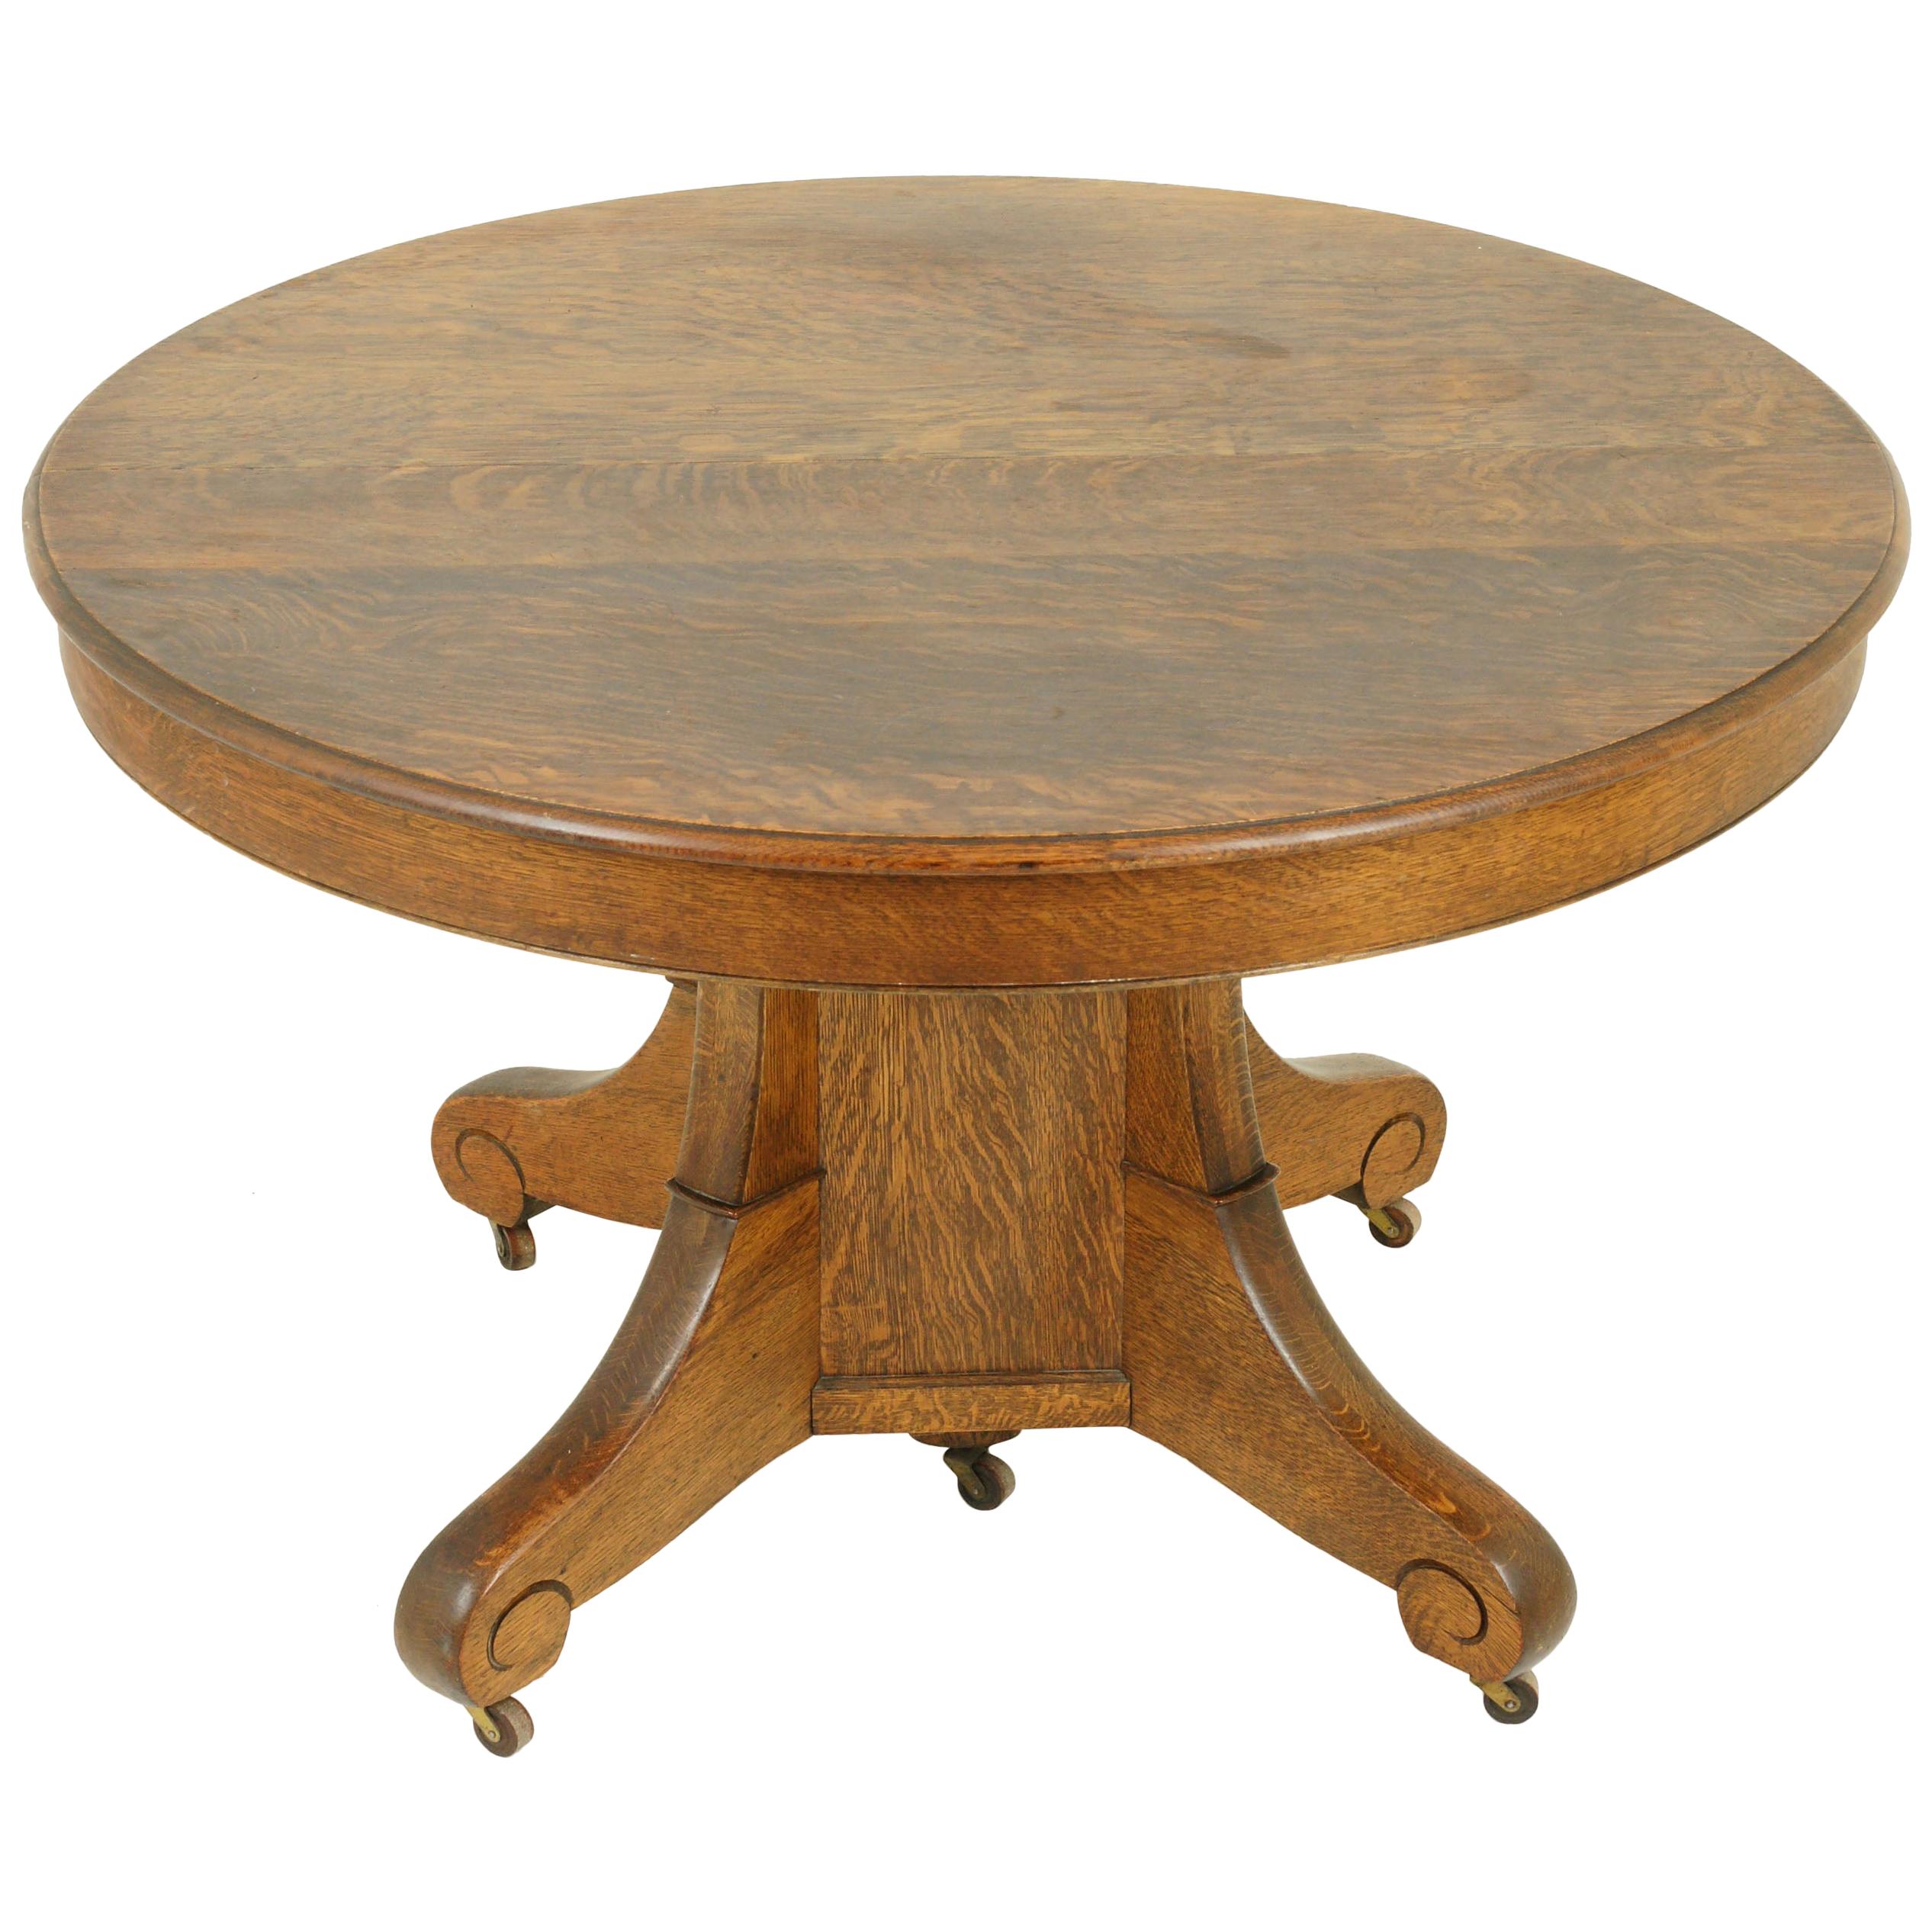 Antique Dining Table, Pedestal Table, Vintage Oak Table, Canada, 1900